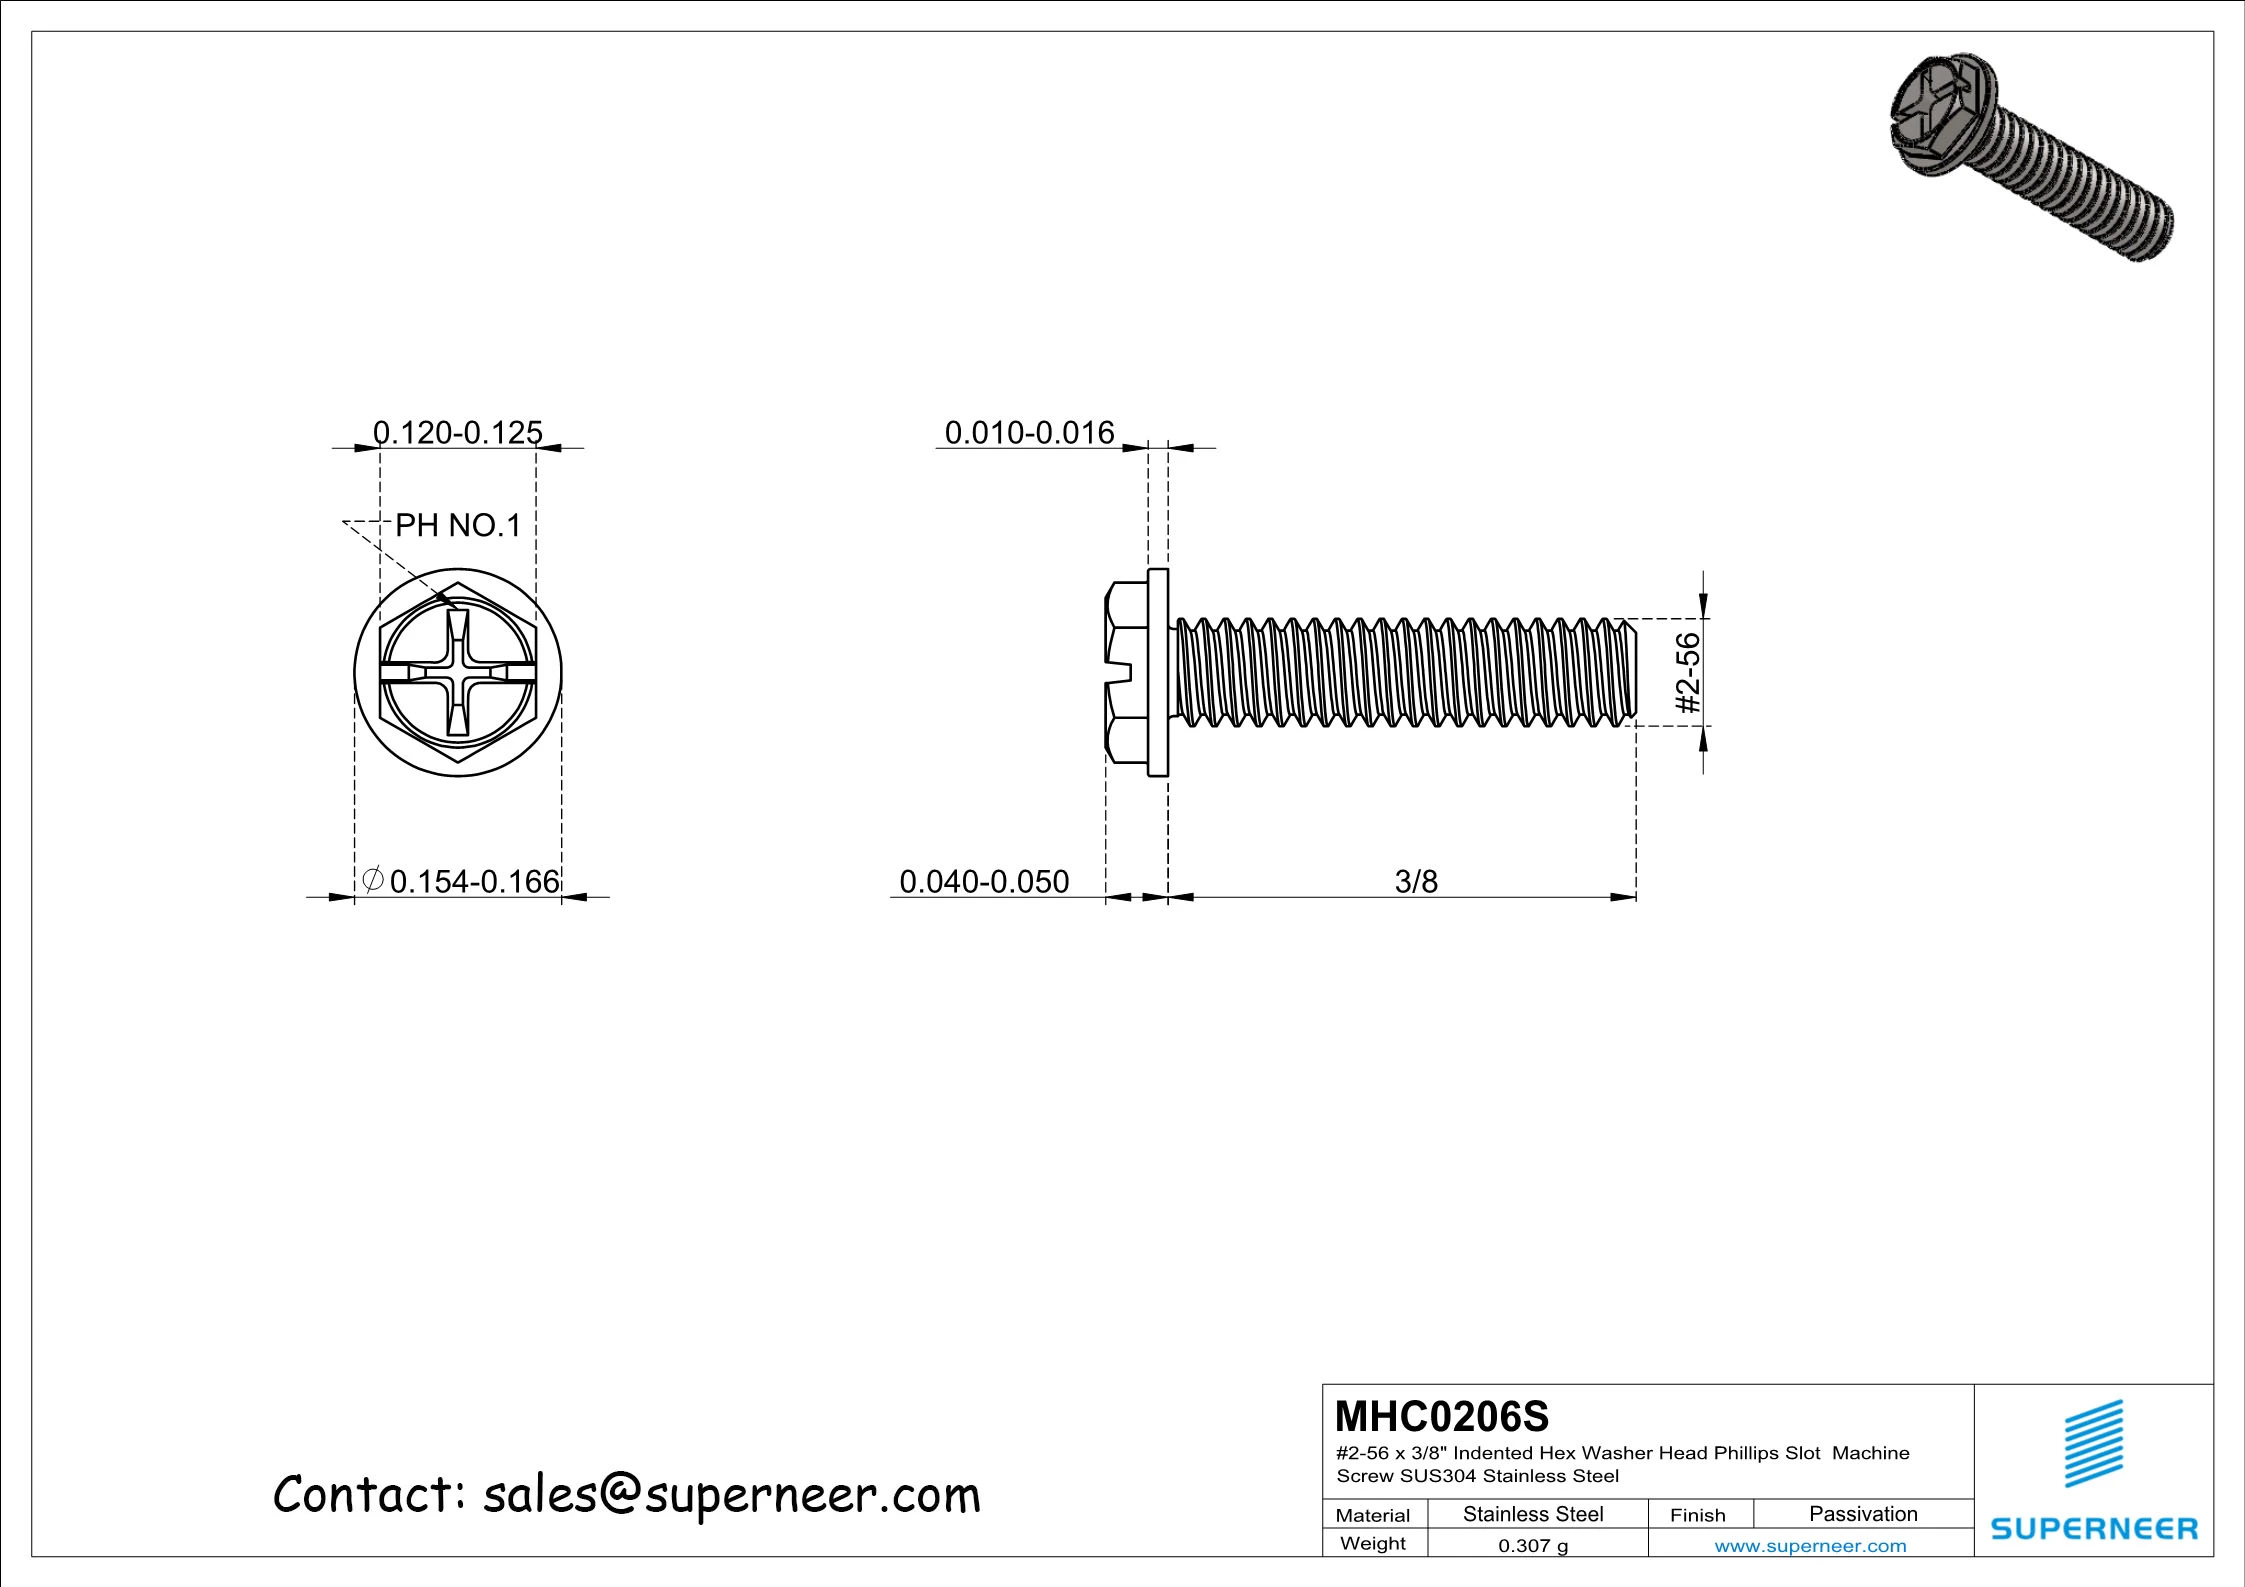 2-56 x 3/8" Indented Hex Washer Head Phillips Slot Machine Screw SUS304 Stainless Steel Inox